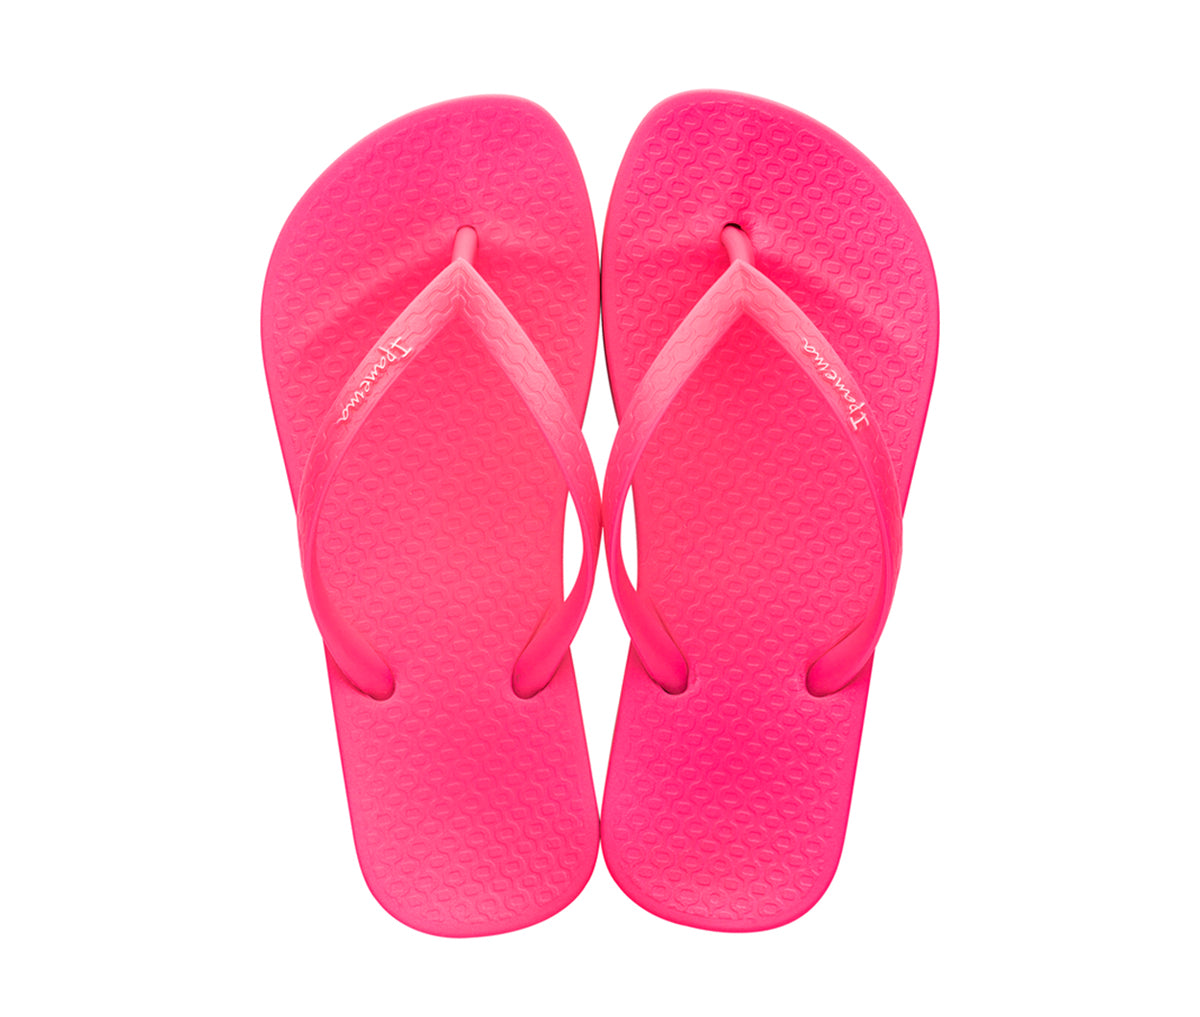 Top view of a pair of pink Ipanema Ana Colors kids flip flops.